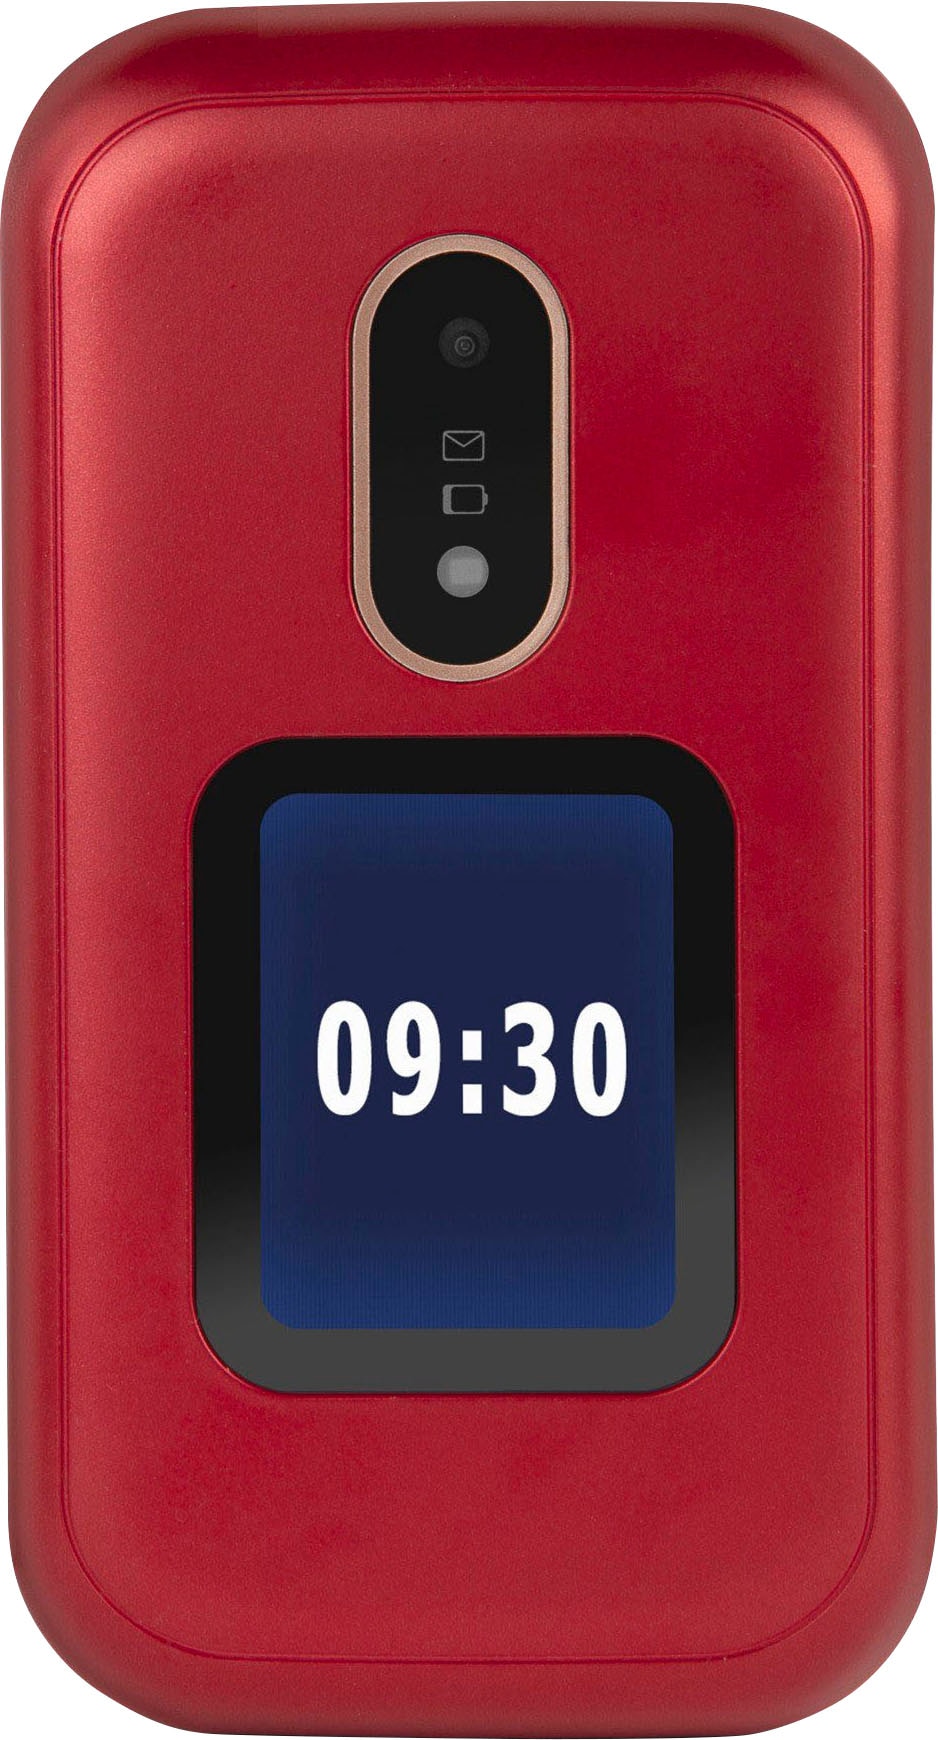 Kamera Zoll, OTTO bei MP 7,11 jetzt cm/2,8 Doro »6060«, kaufen rot, 3 Handy